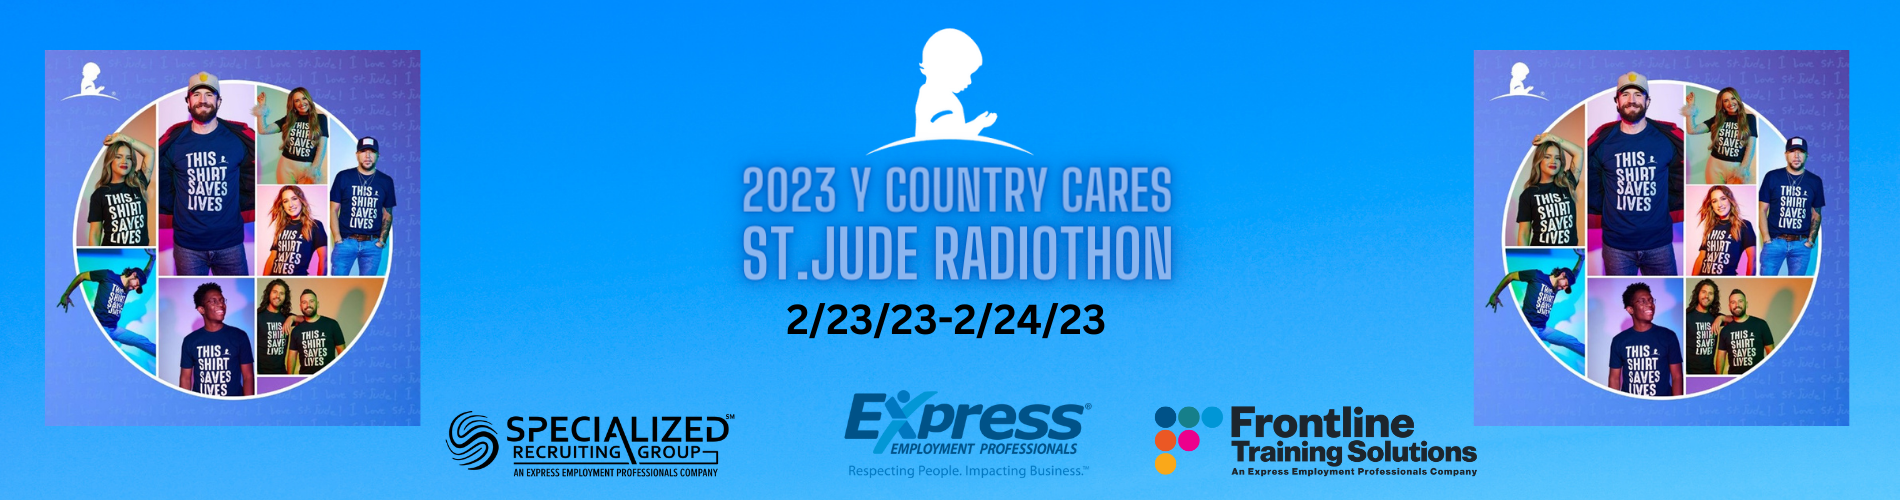 St jude Radiothon 2023